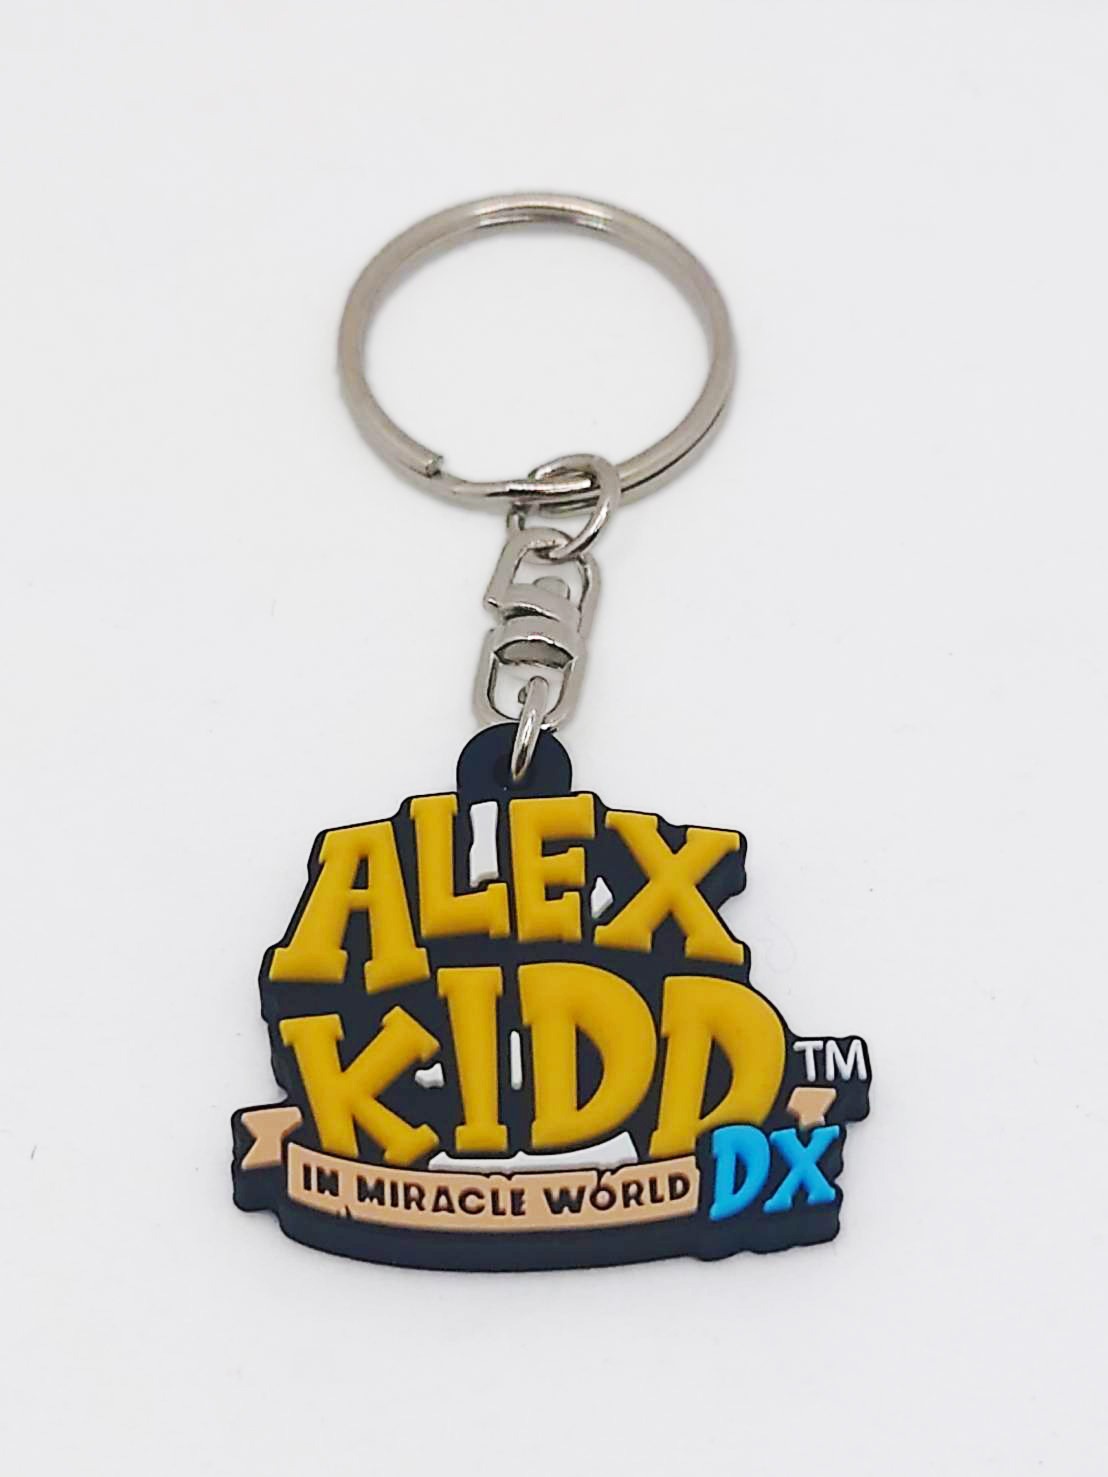 Alexkidd in Miracle World DX, アレックスキッドのミラクルワールド DX, セガ, Sega, Nintendo Switch, PlayStation 4, PlayStation 5, Game Source Entertainment, GSE